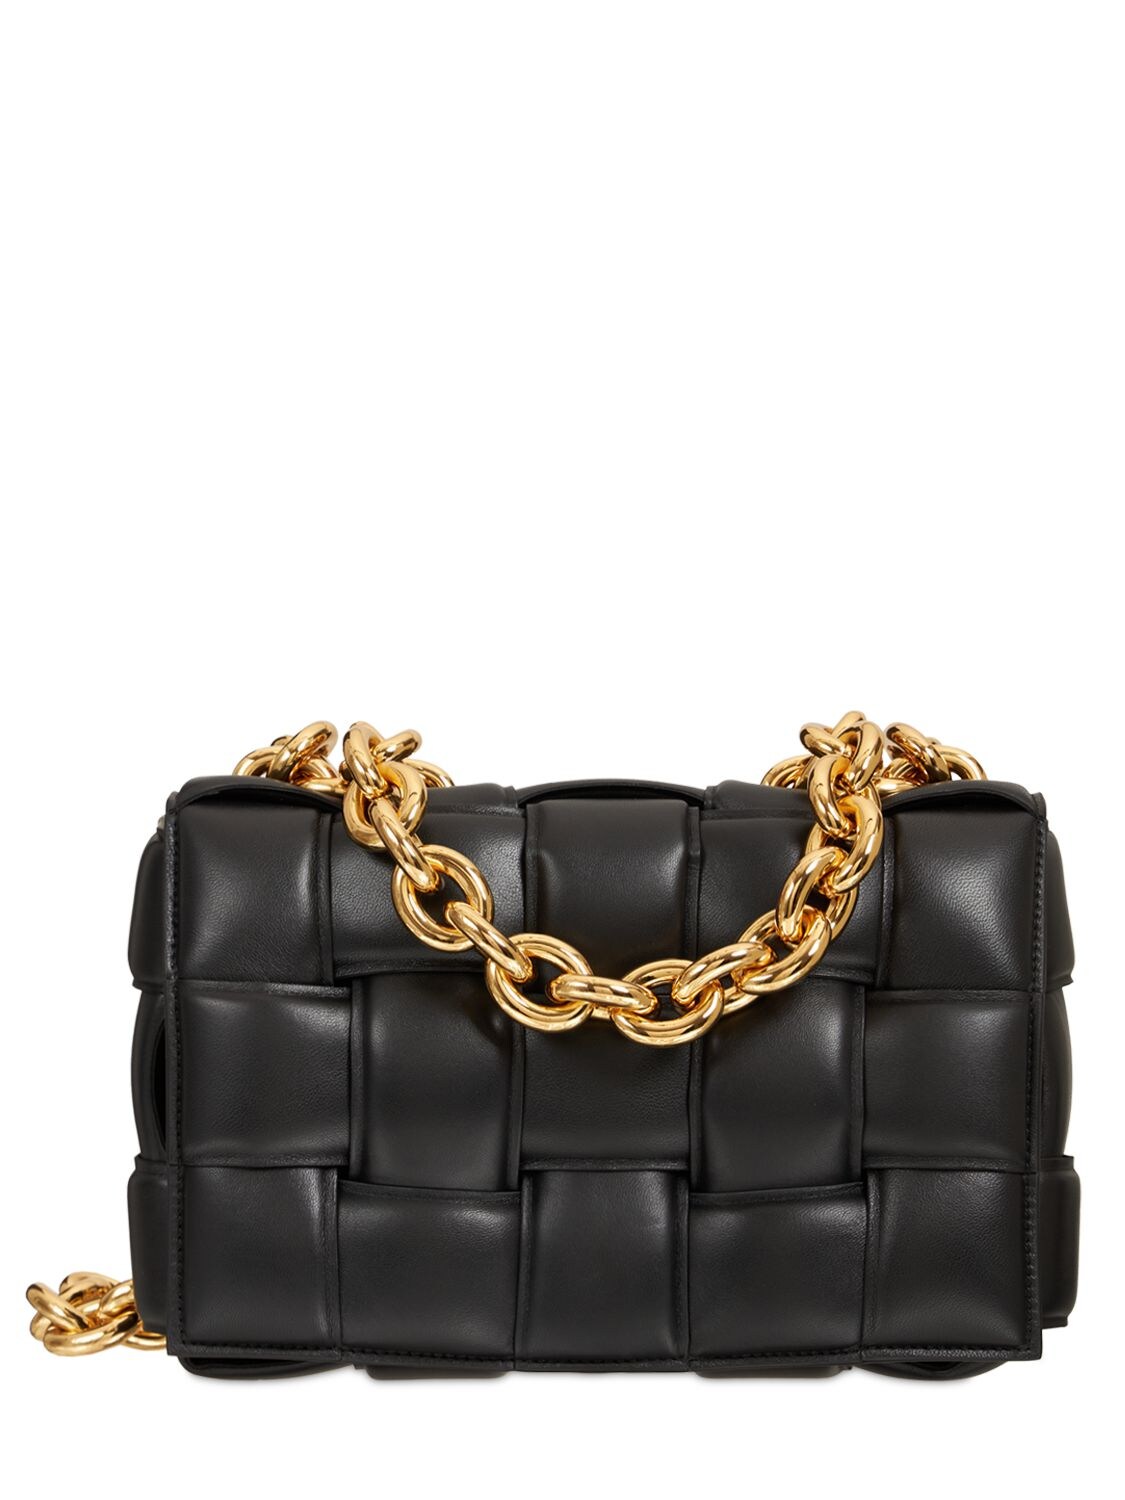 Bottega Veneta - The chain cassette shoulder bag - Black/Gold